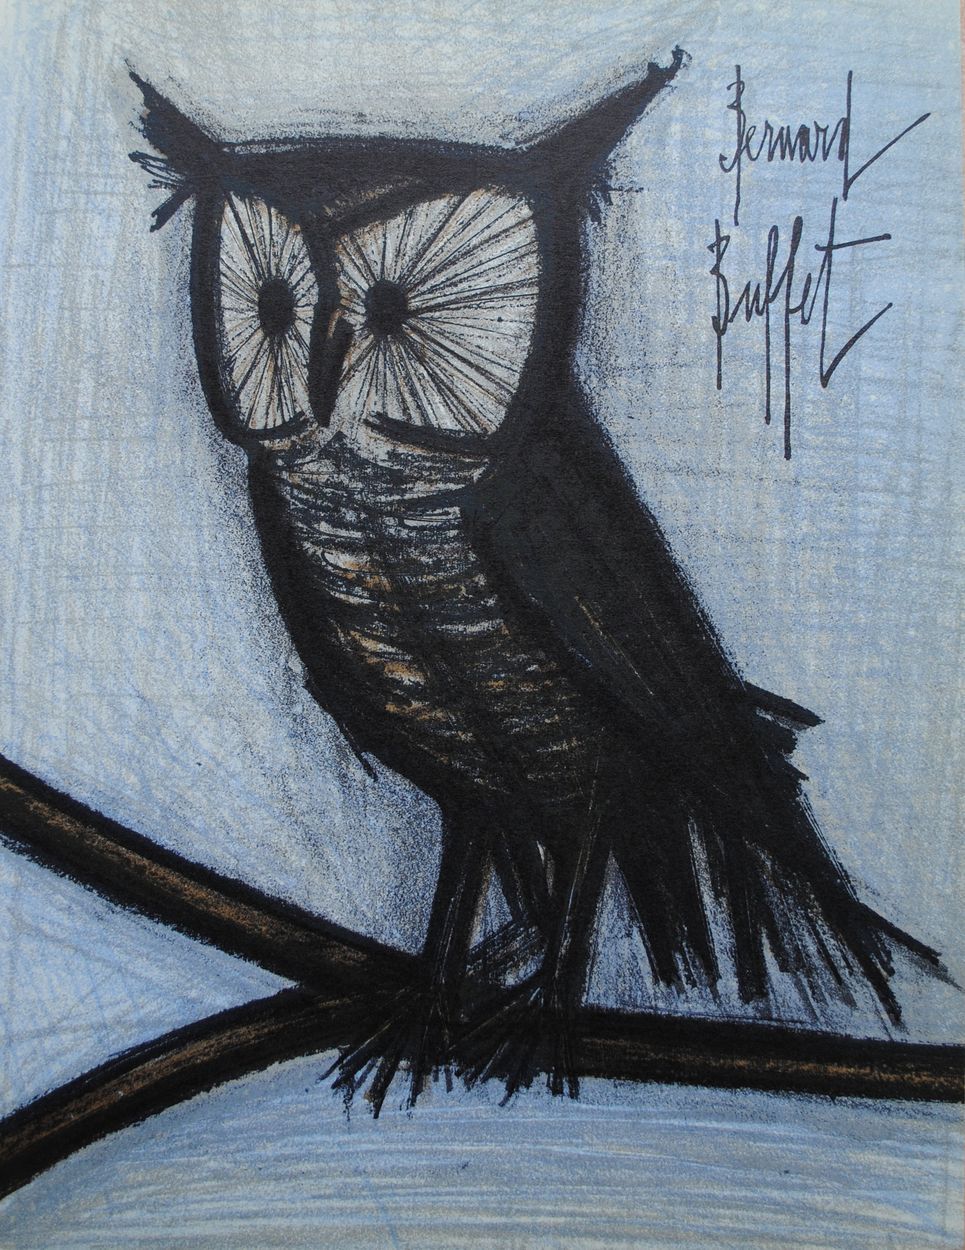 Bernard Buffet 伯纳德-布菲特(1928-1999)

小猫头鹰



牛皮纸上的原始石版画

板块中的签名

包括在艺术家的目录中

1967年&hellip;